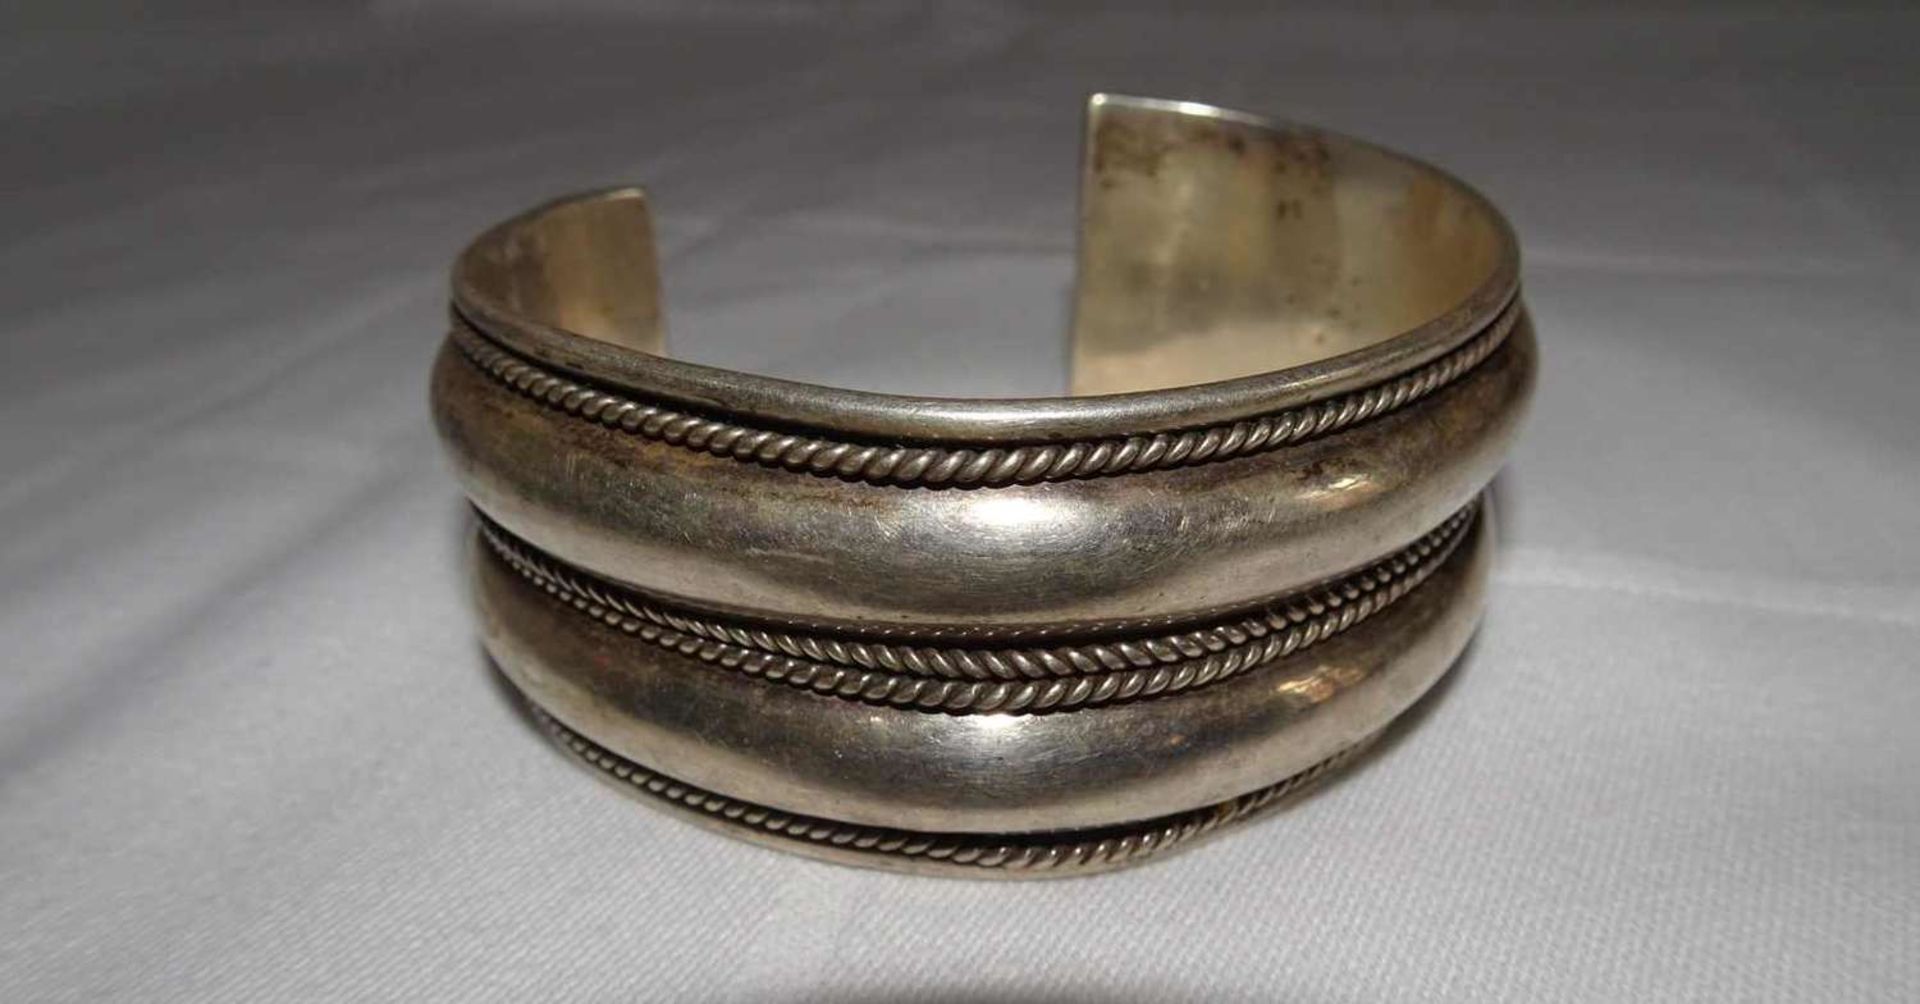 Armreif, 925er Silber, offene Ringschiene. Gewicht ca. 50 gr. Bangle, 925 silver, open ring band. - Image 2 of 4